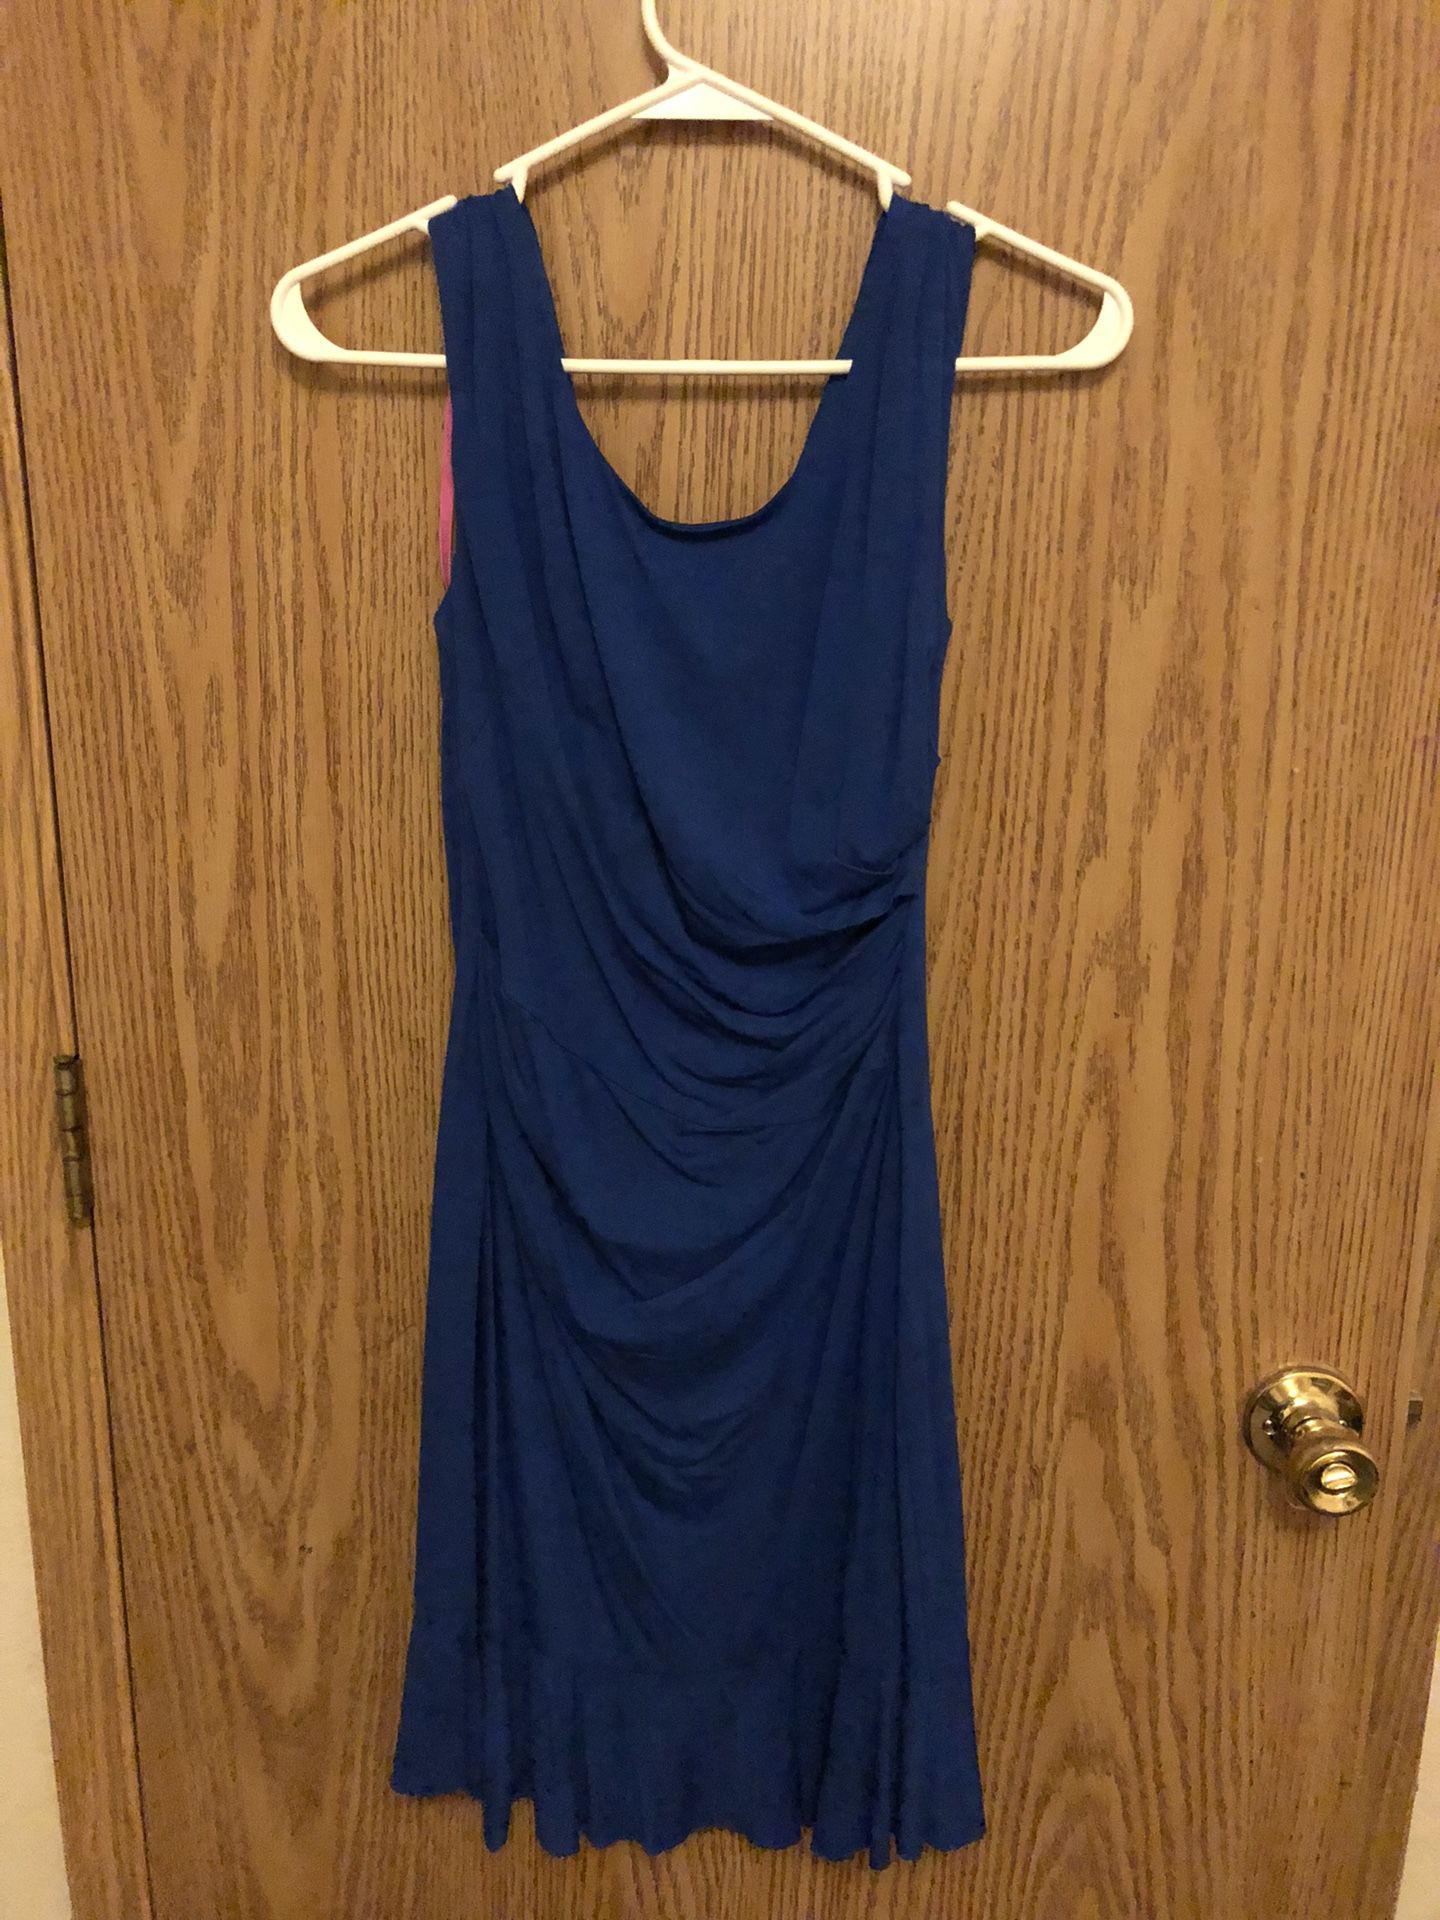 Betsy Johnson Blue Dress